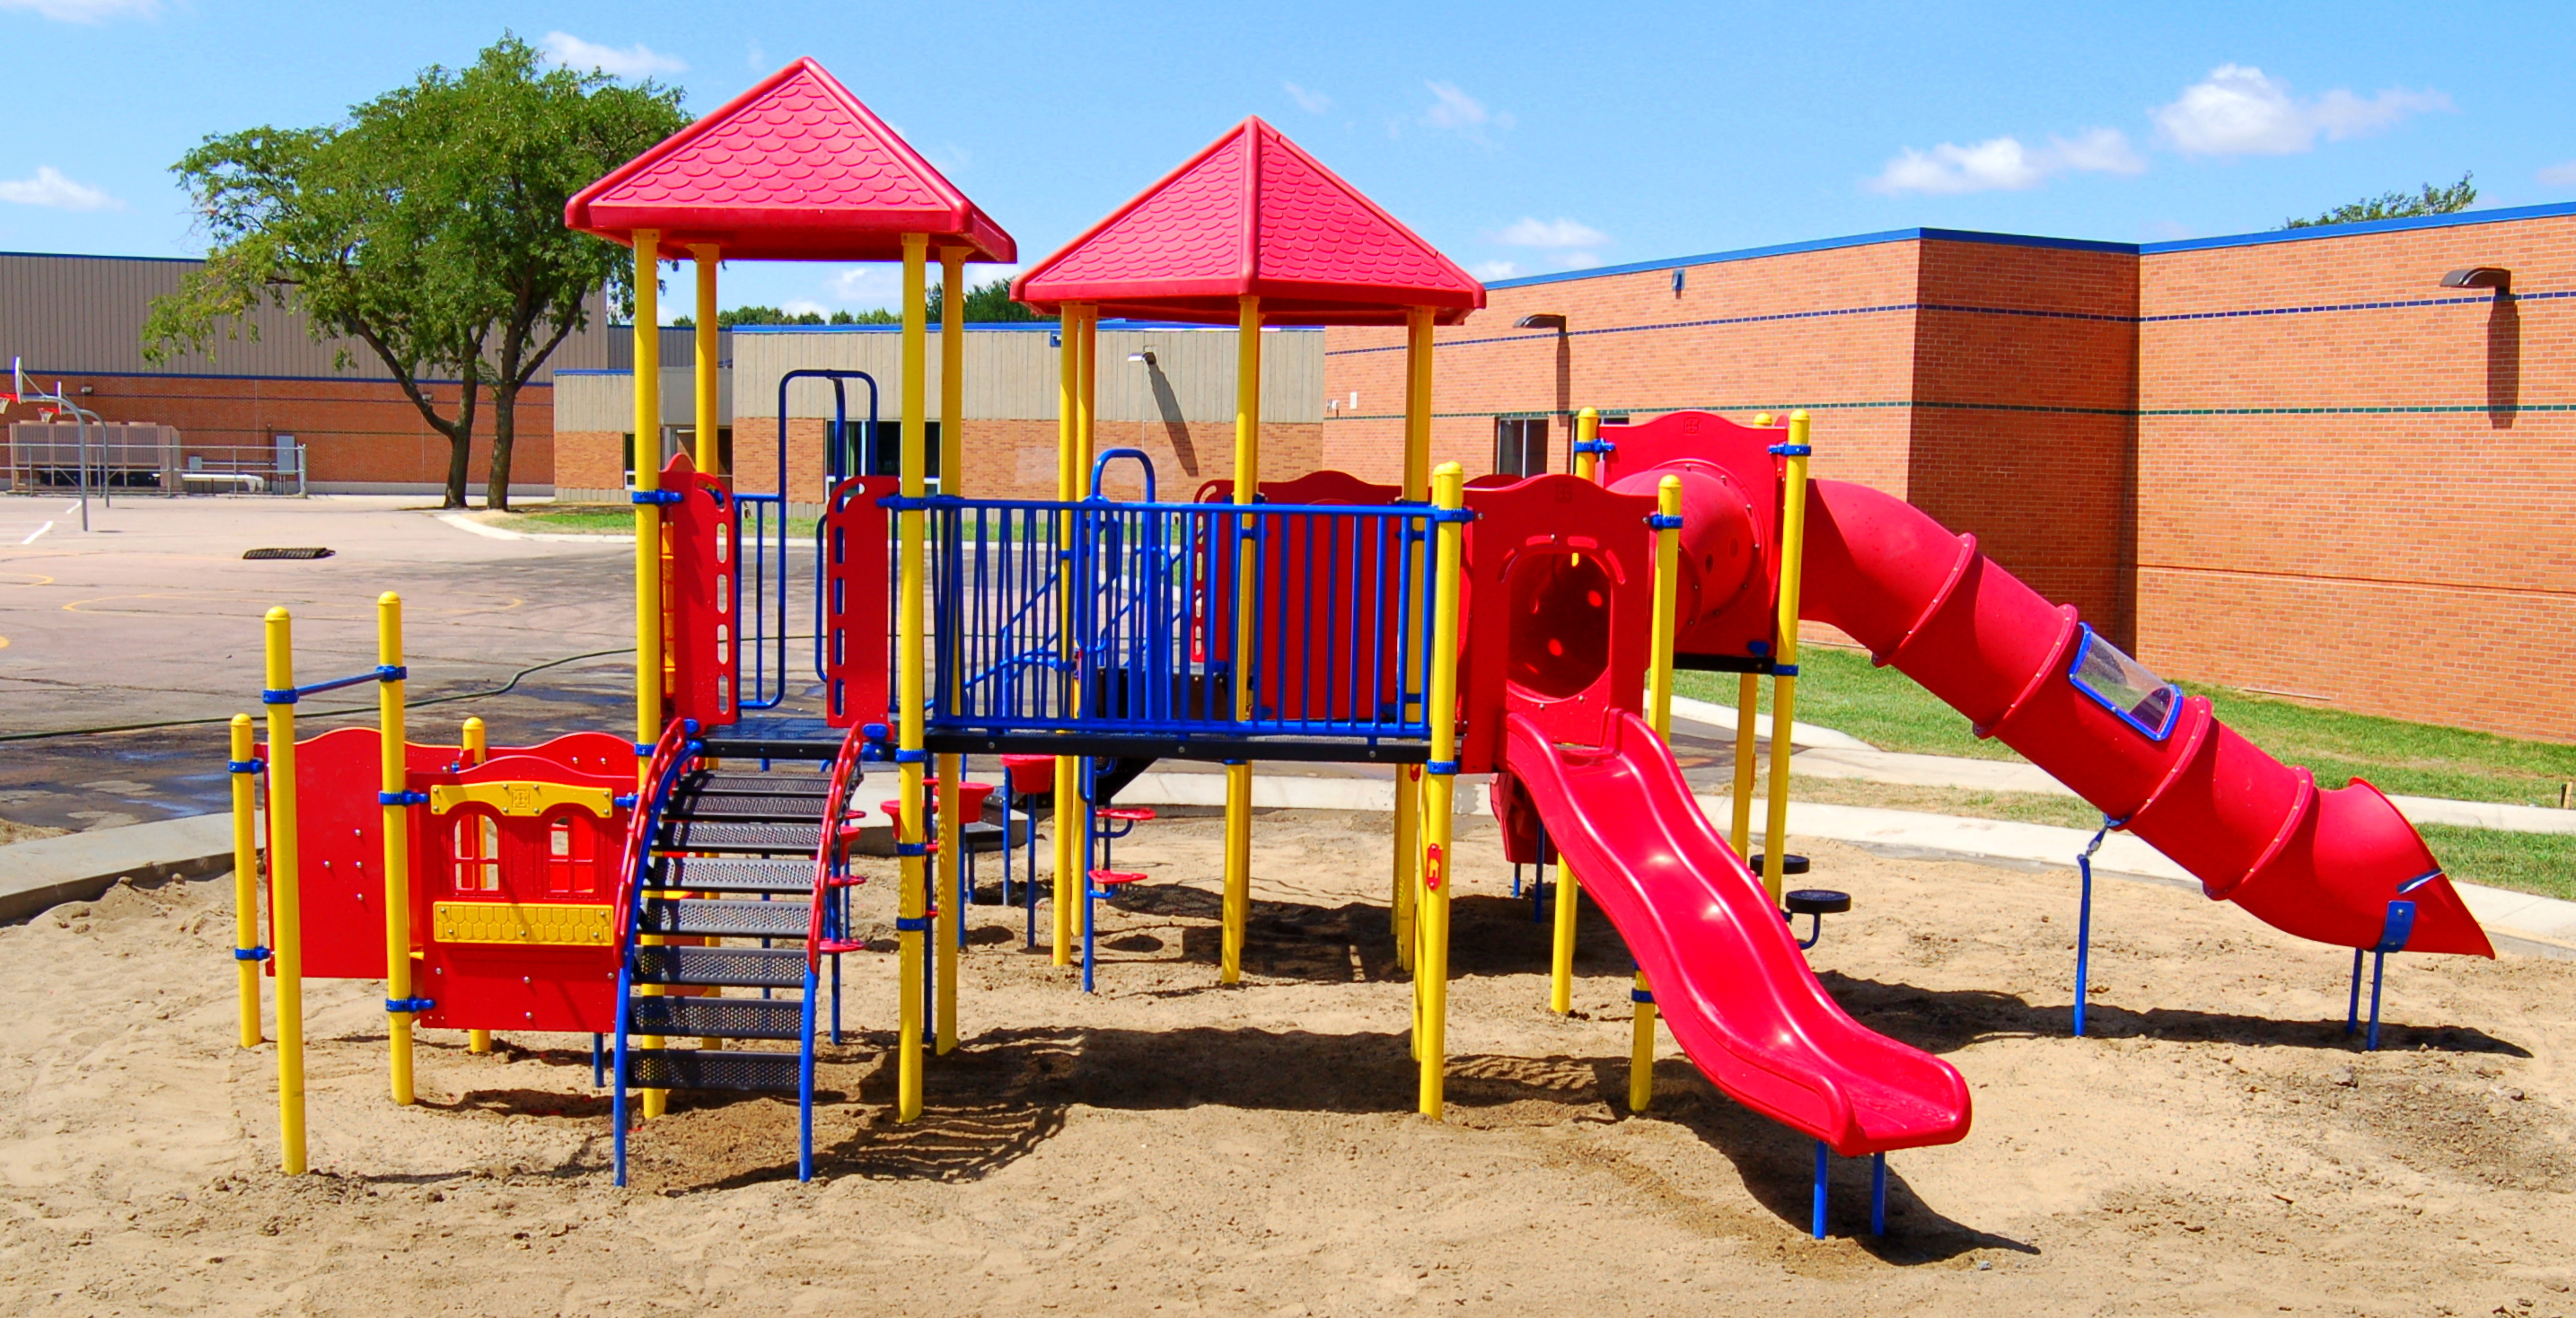 Harvey Dunn Elementary School Playground in Sioux Falls, SD